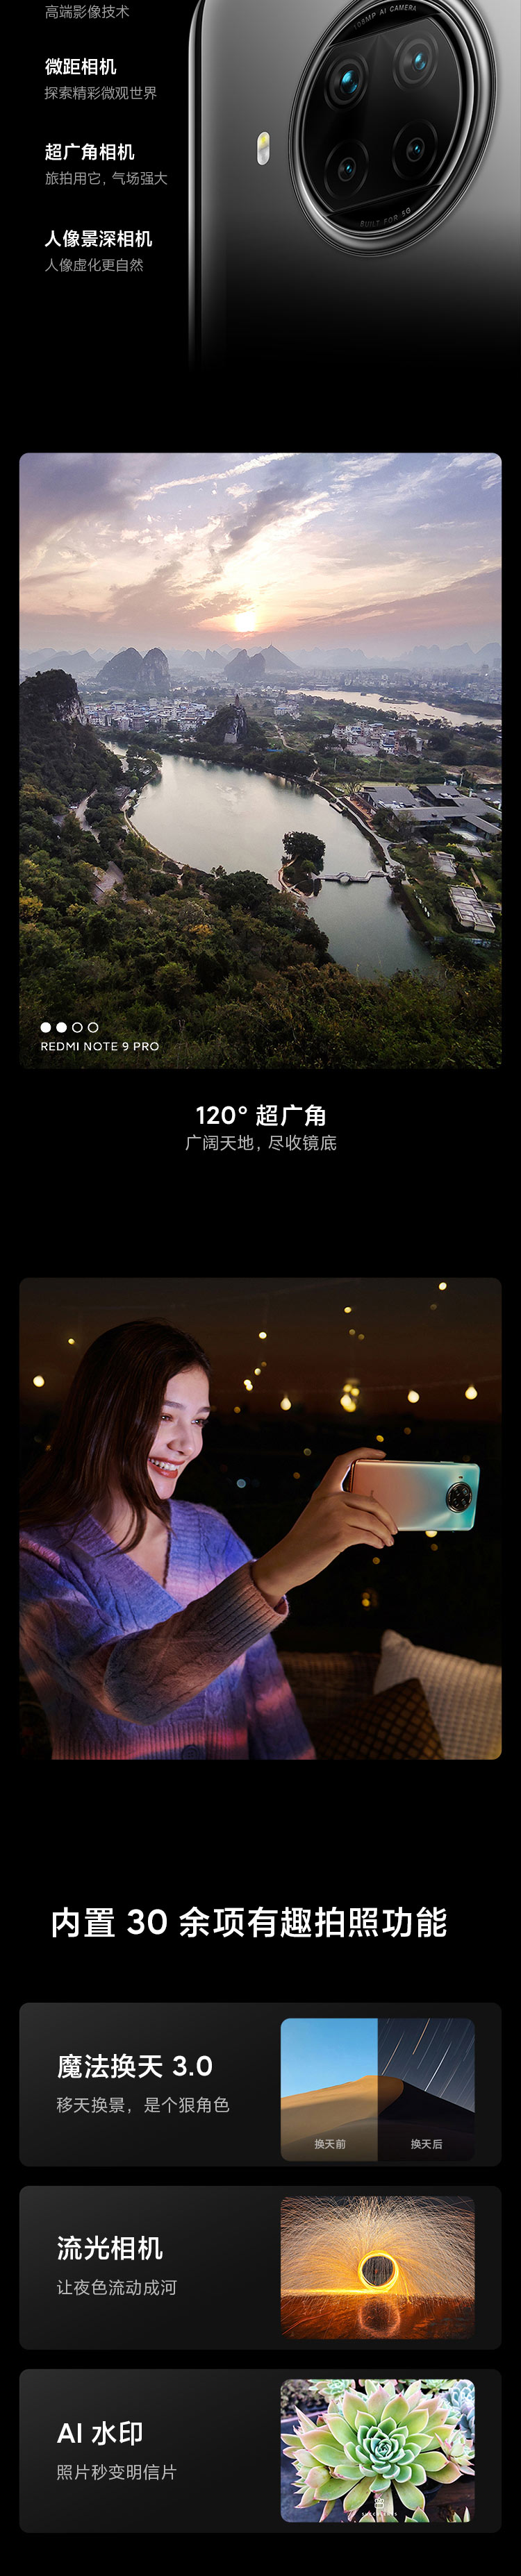 Redmi Note 9 Pro 5G 一亿像素 骁龙750G 33W快充 120Hz刷新率 碧海星辰 8GB+256GB 智能手机 小米 红米